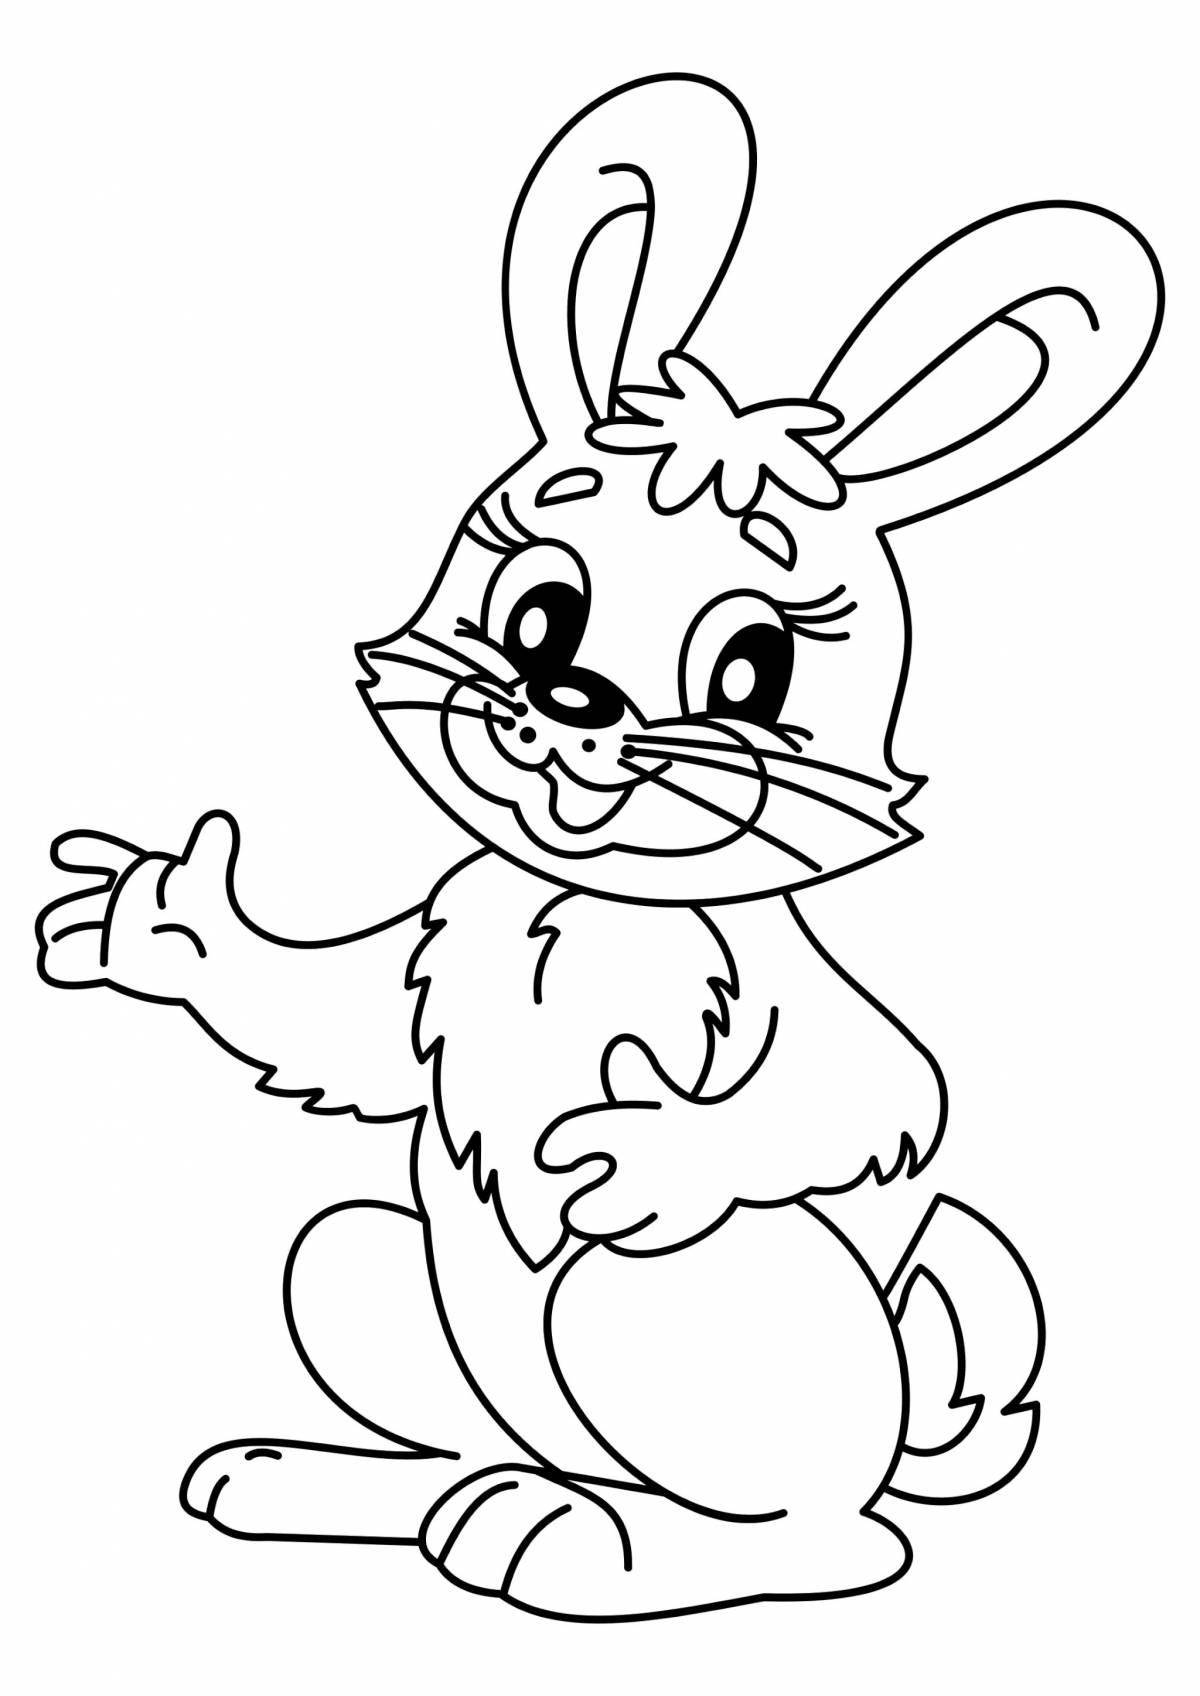 Playful coloring rabbit drawing